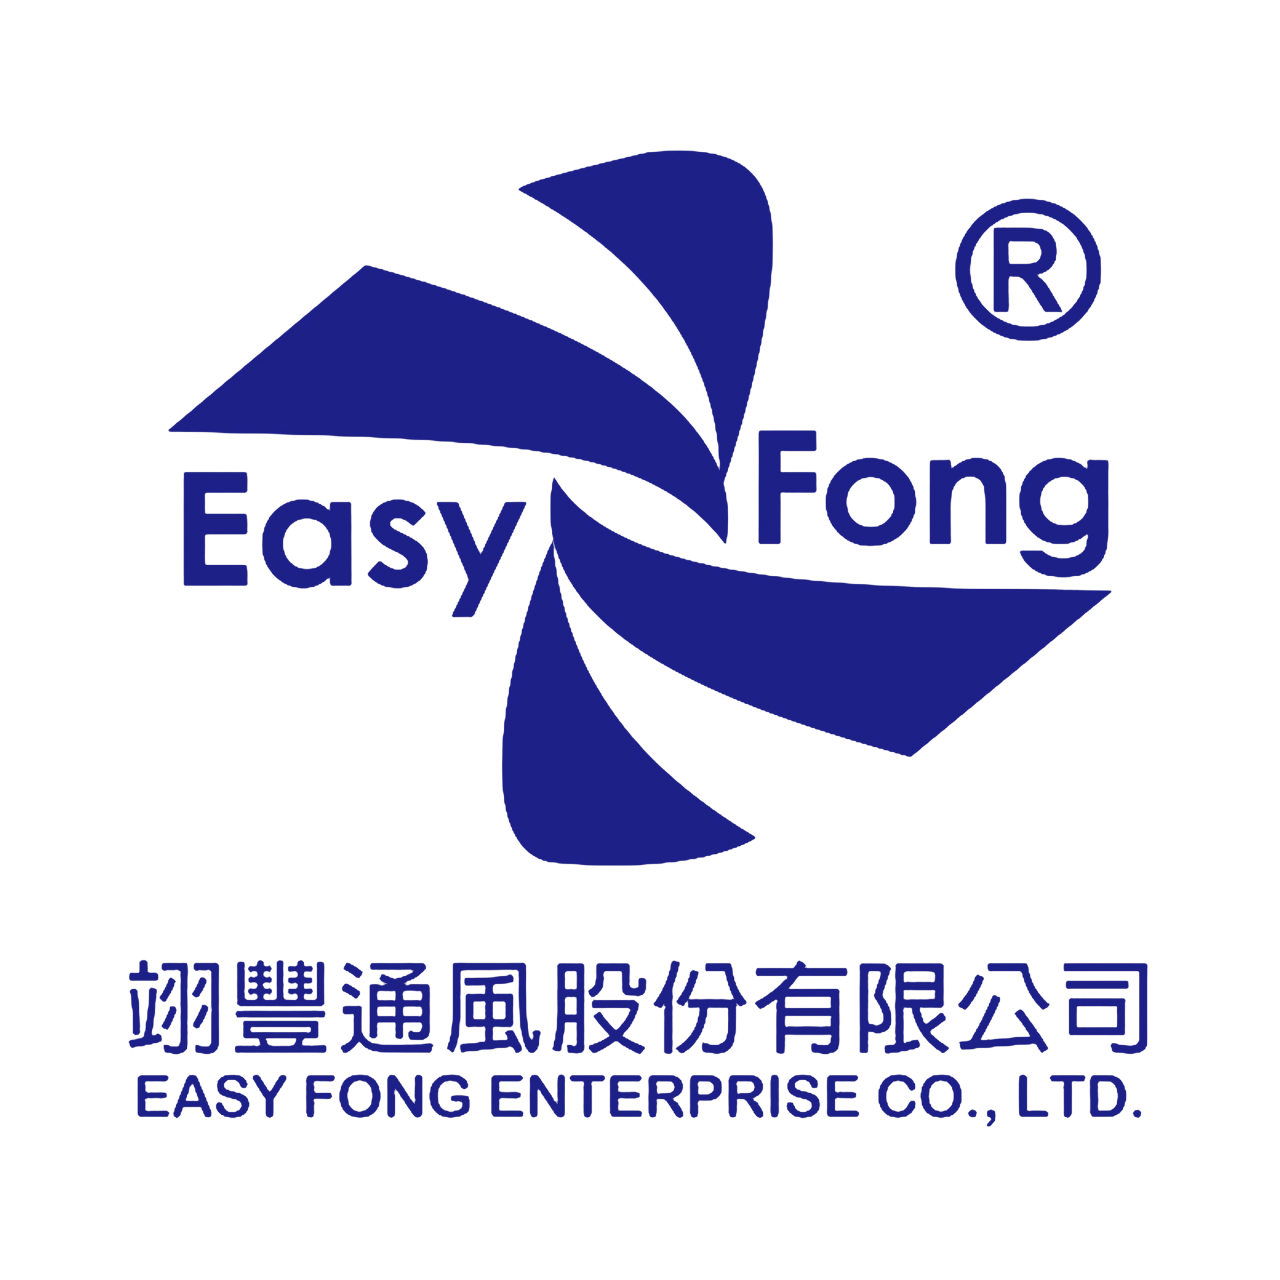 Copy of EASY FONG ENTERPRISE CO., LTD.